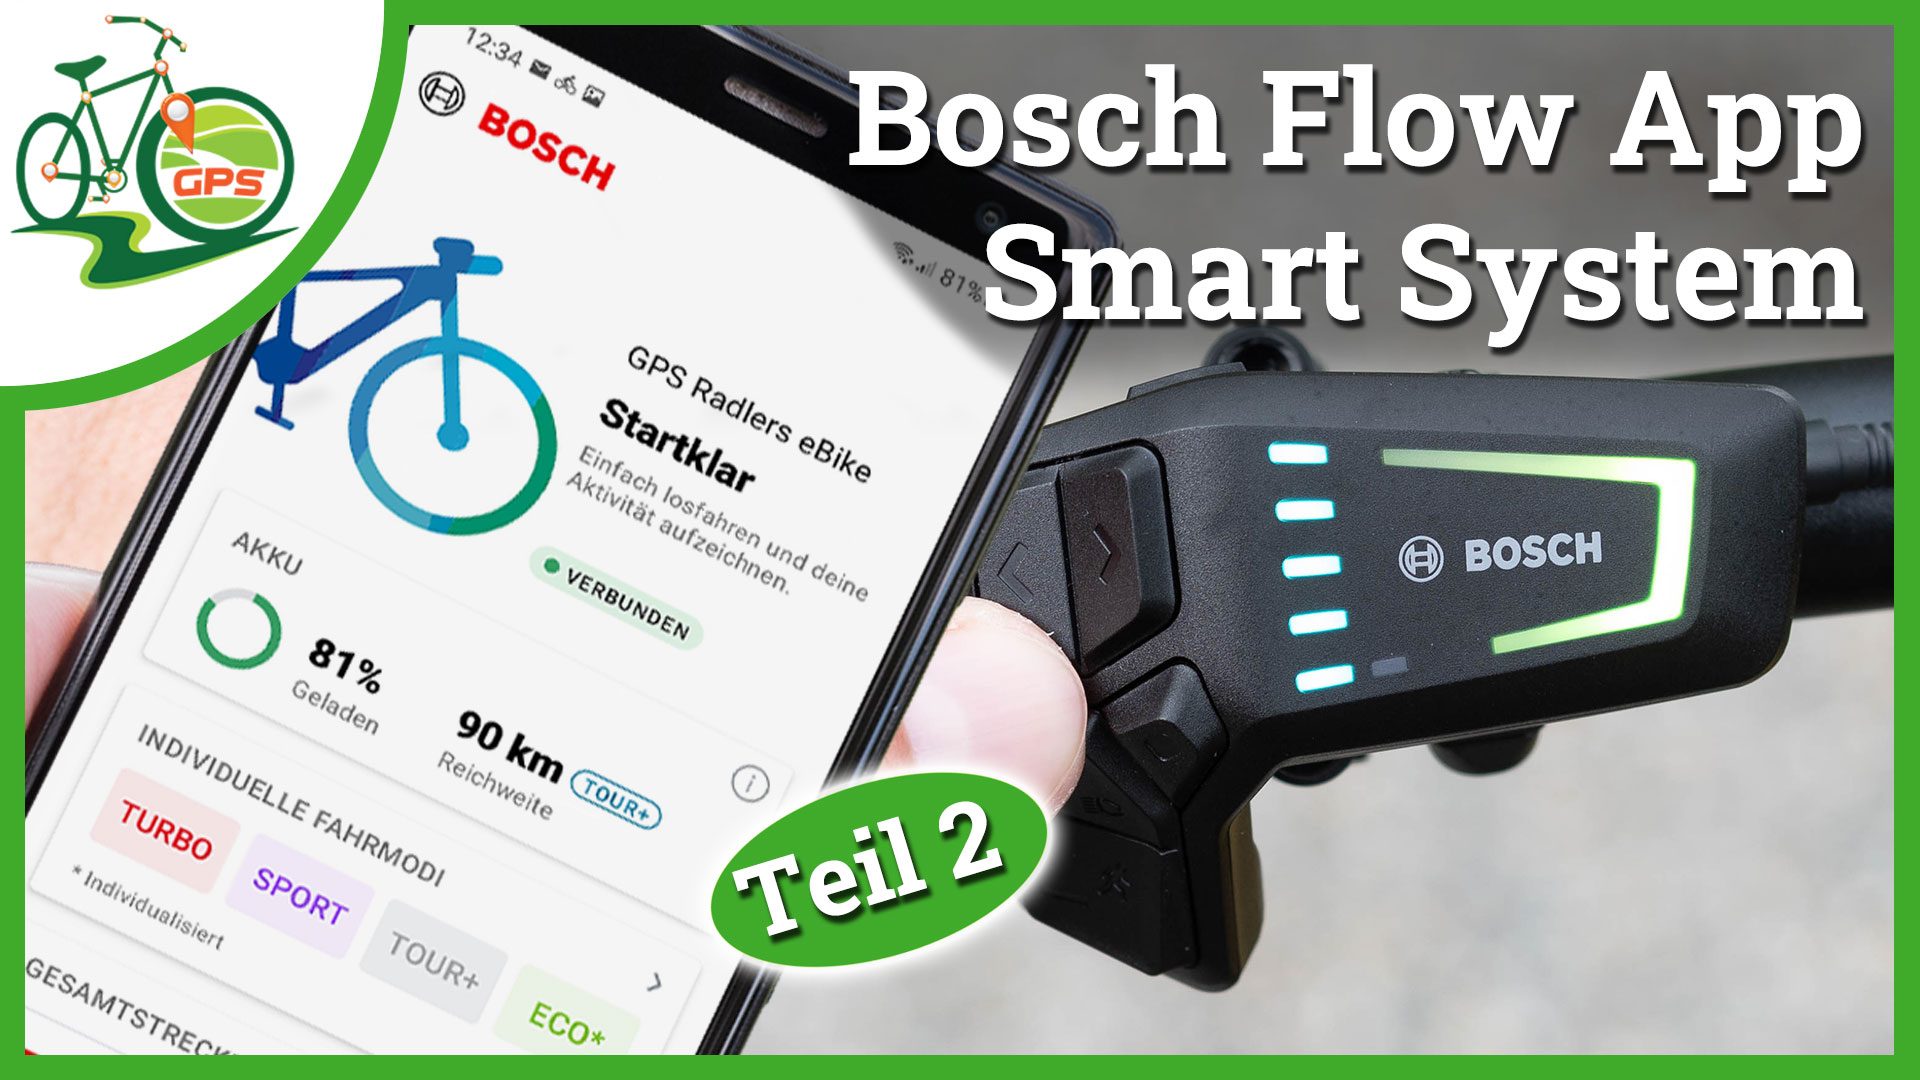 Video Bosch Smart System Flow App